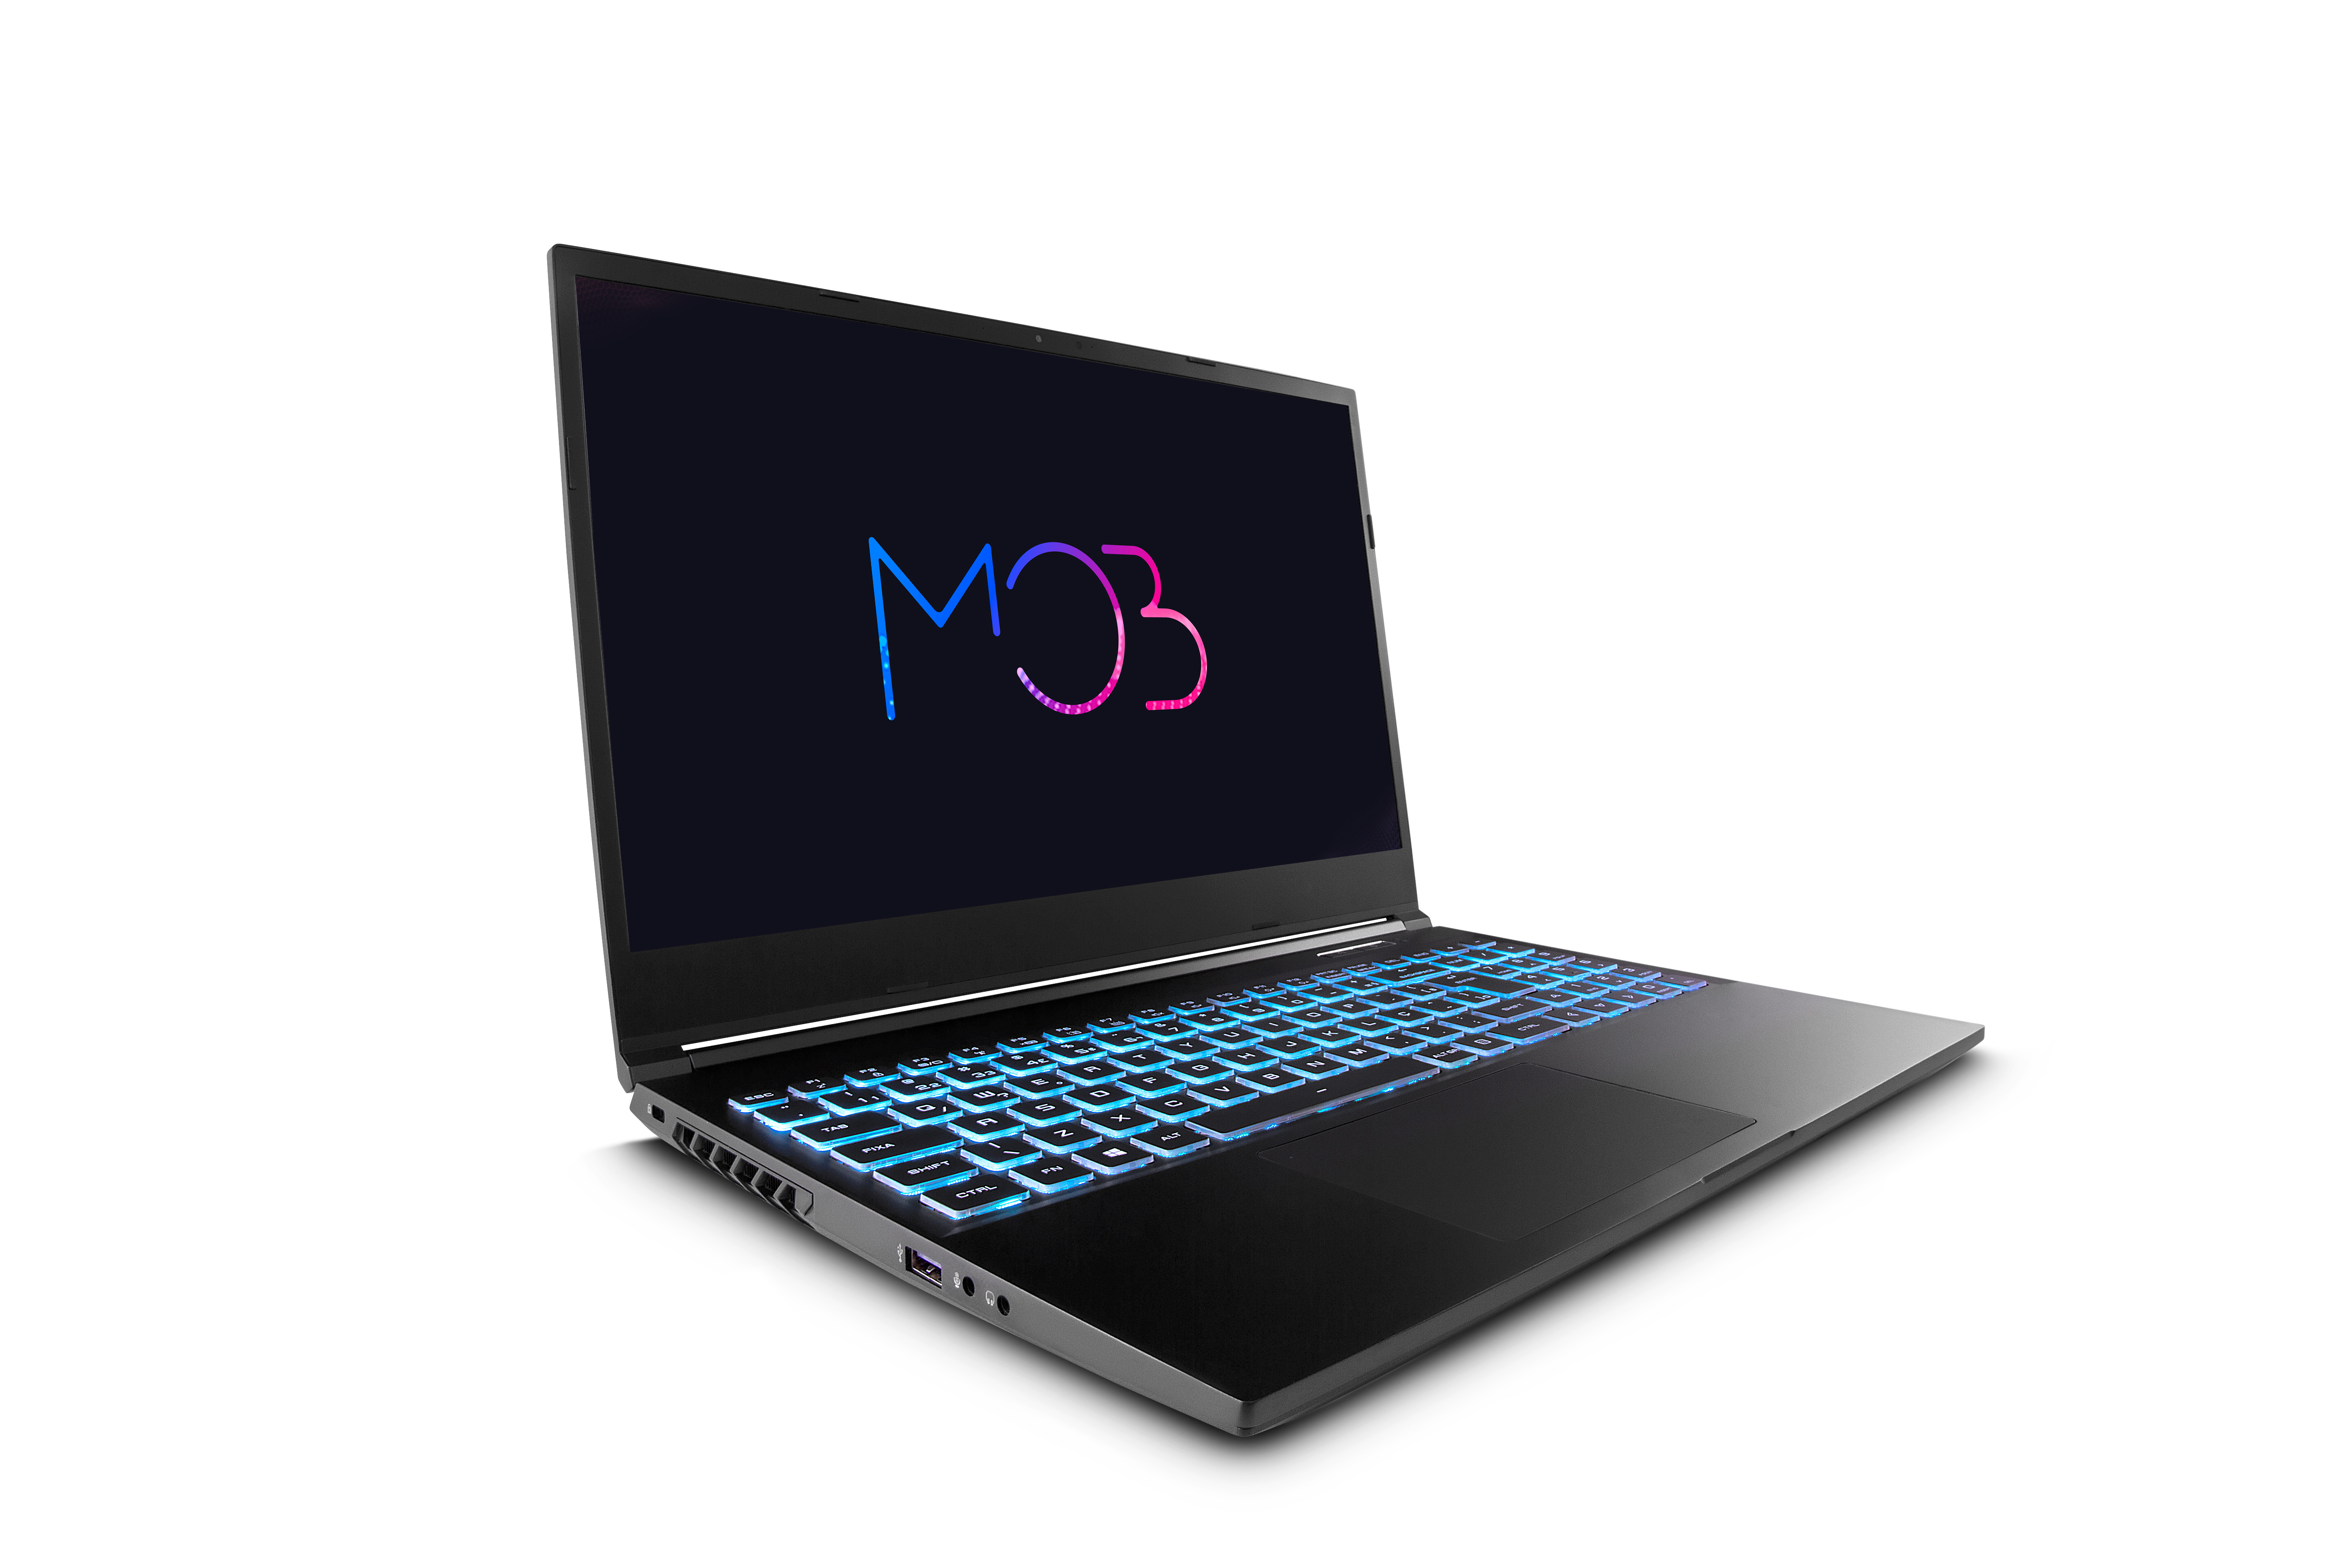 Avell | Empresa anuncia nova linha de notebooks chamada MOB